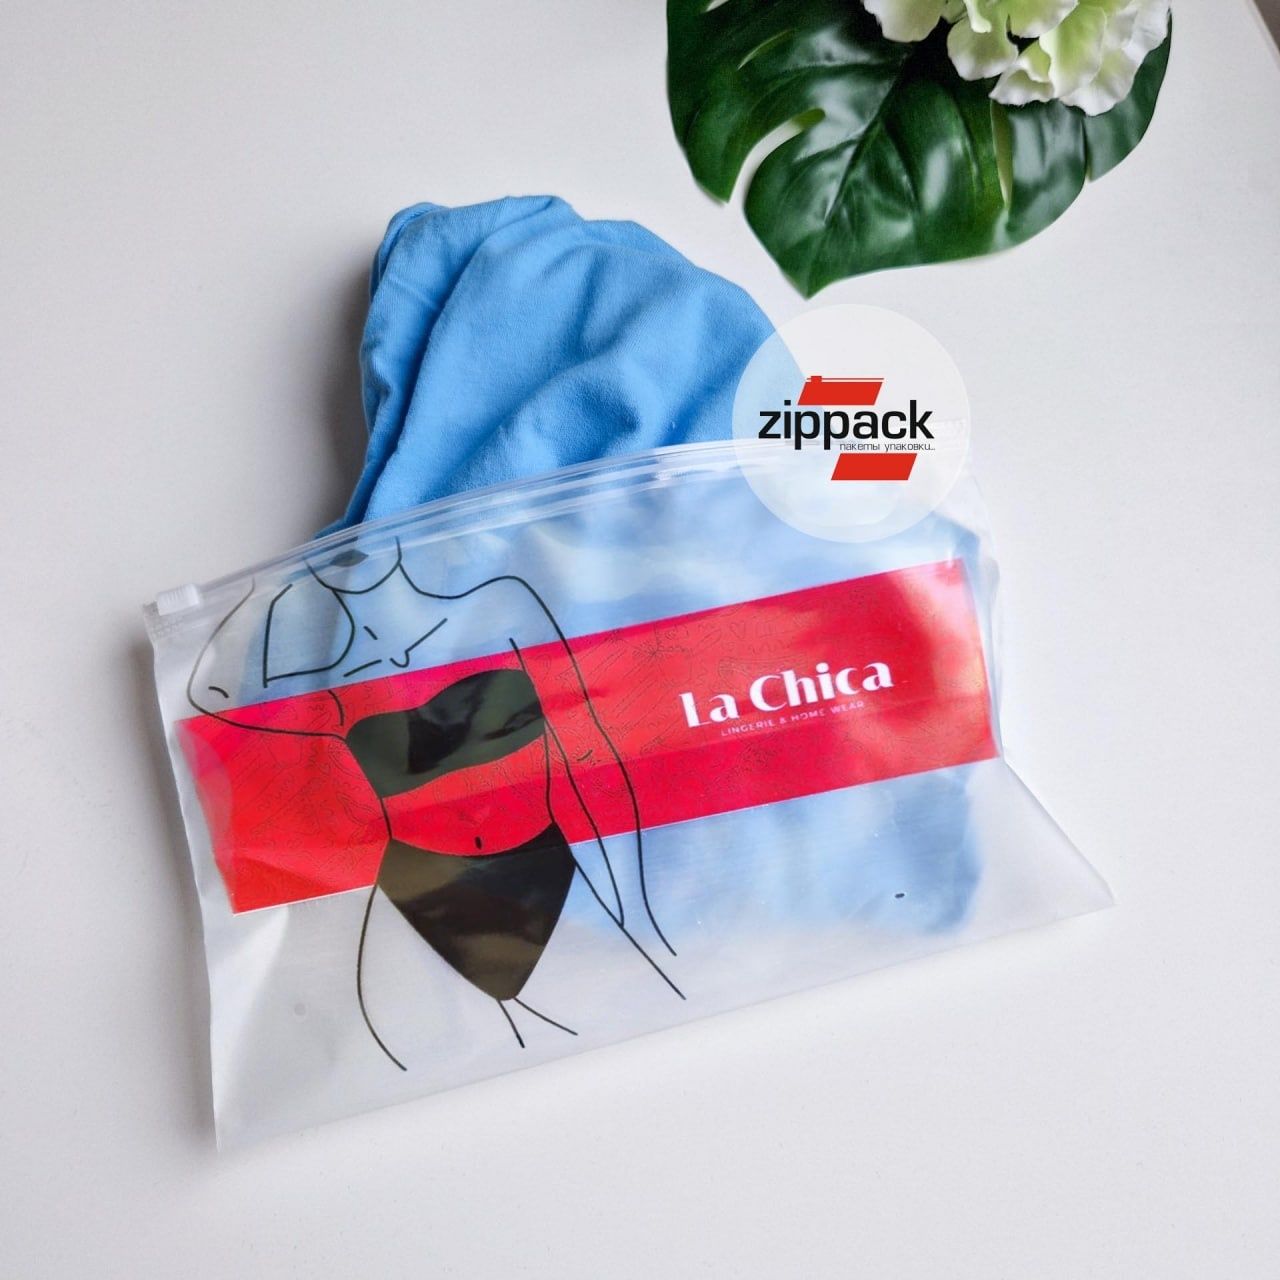 Ziplock Paketlar/зиплок пакеты